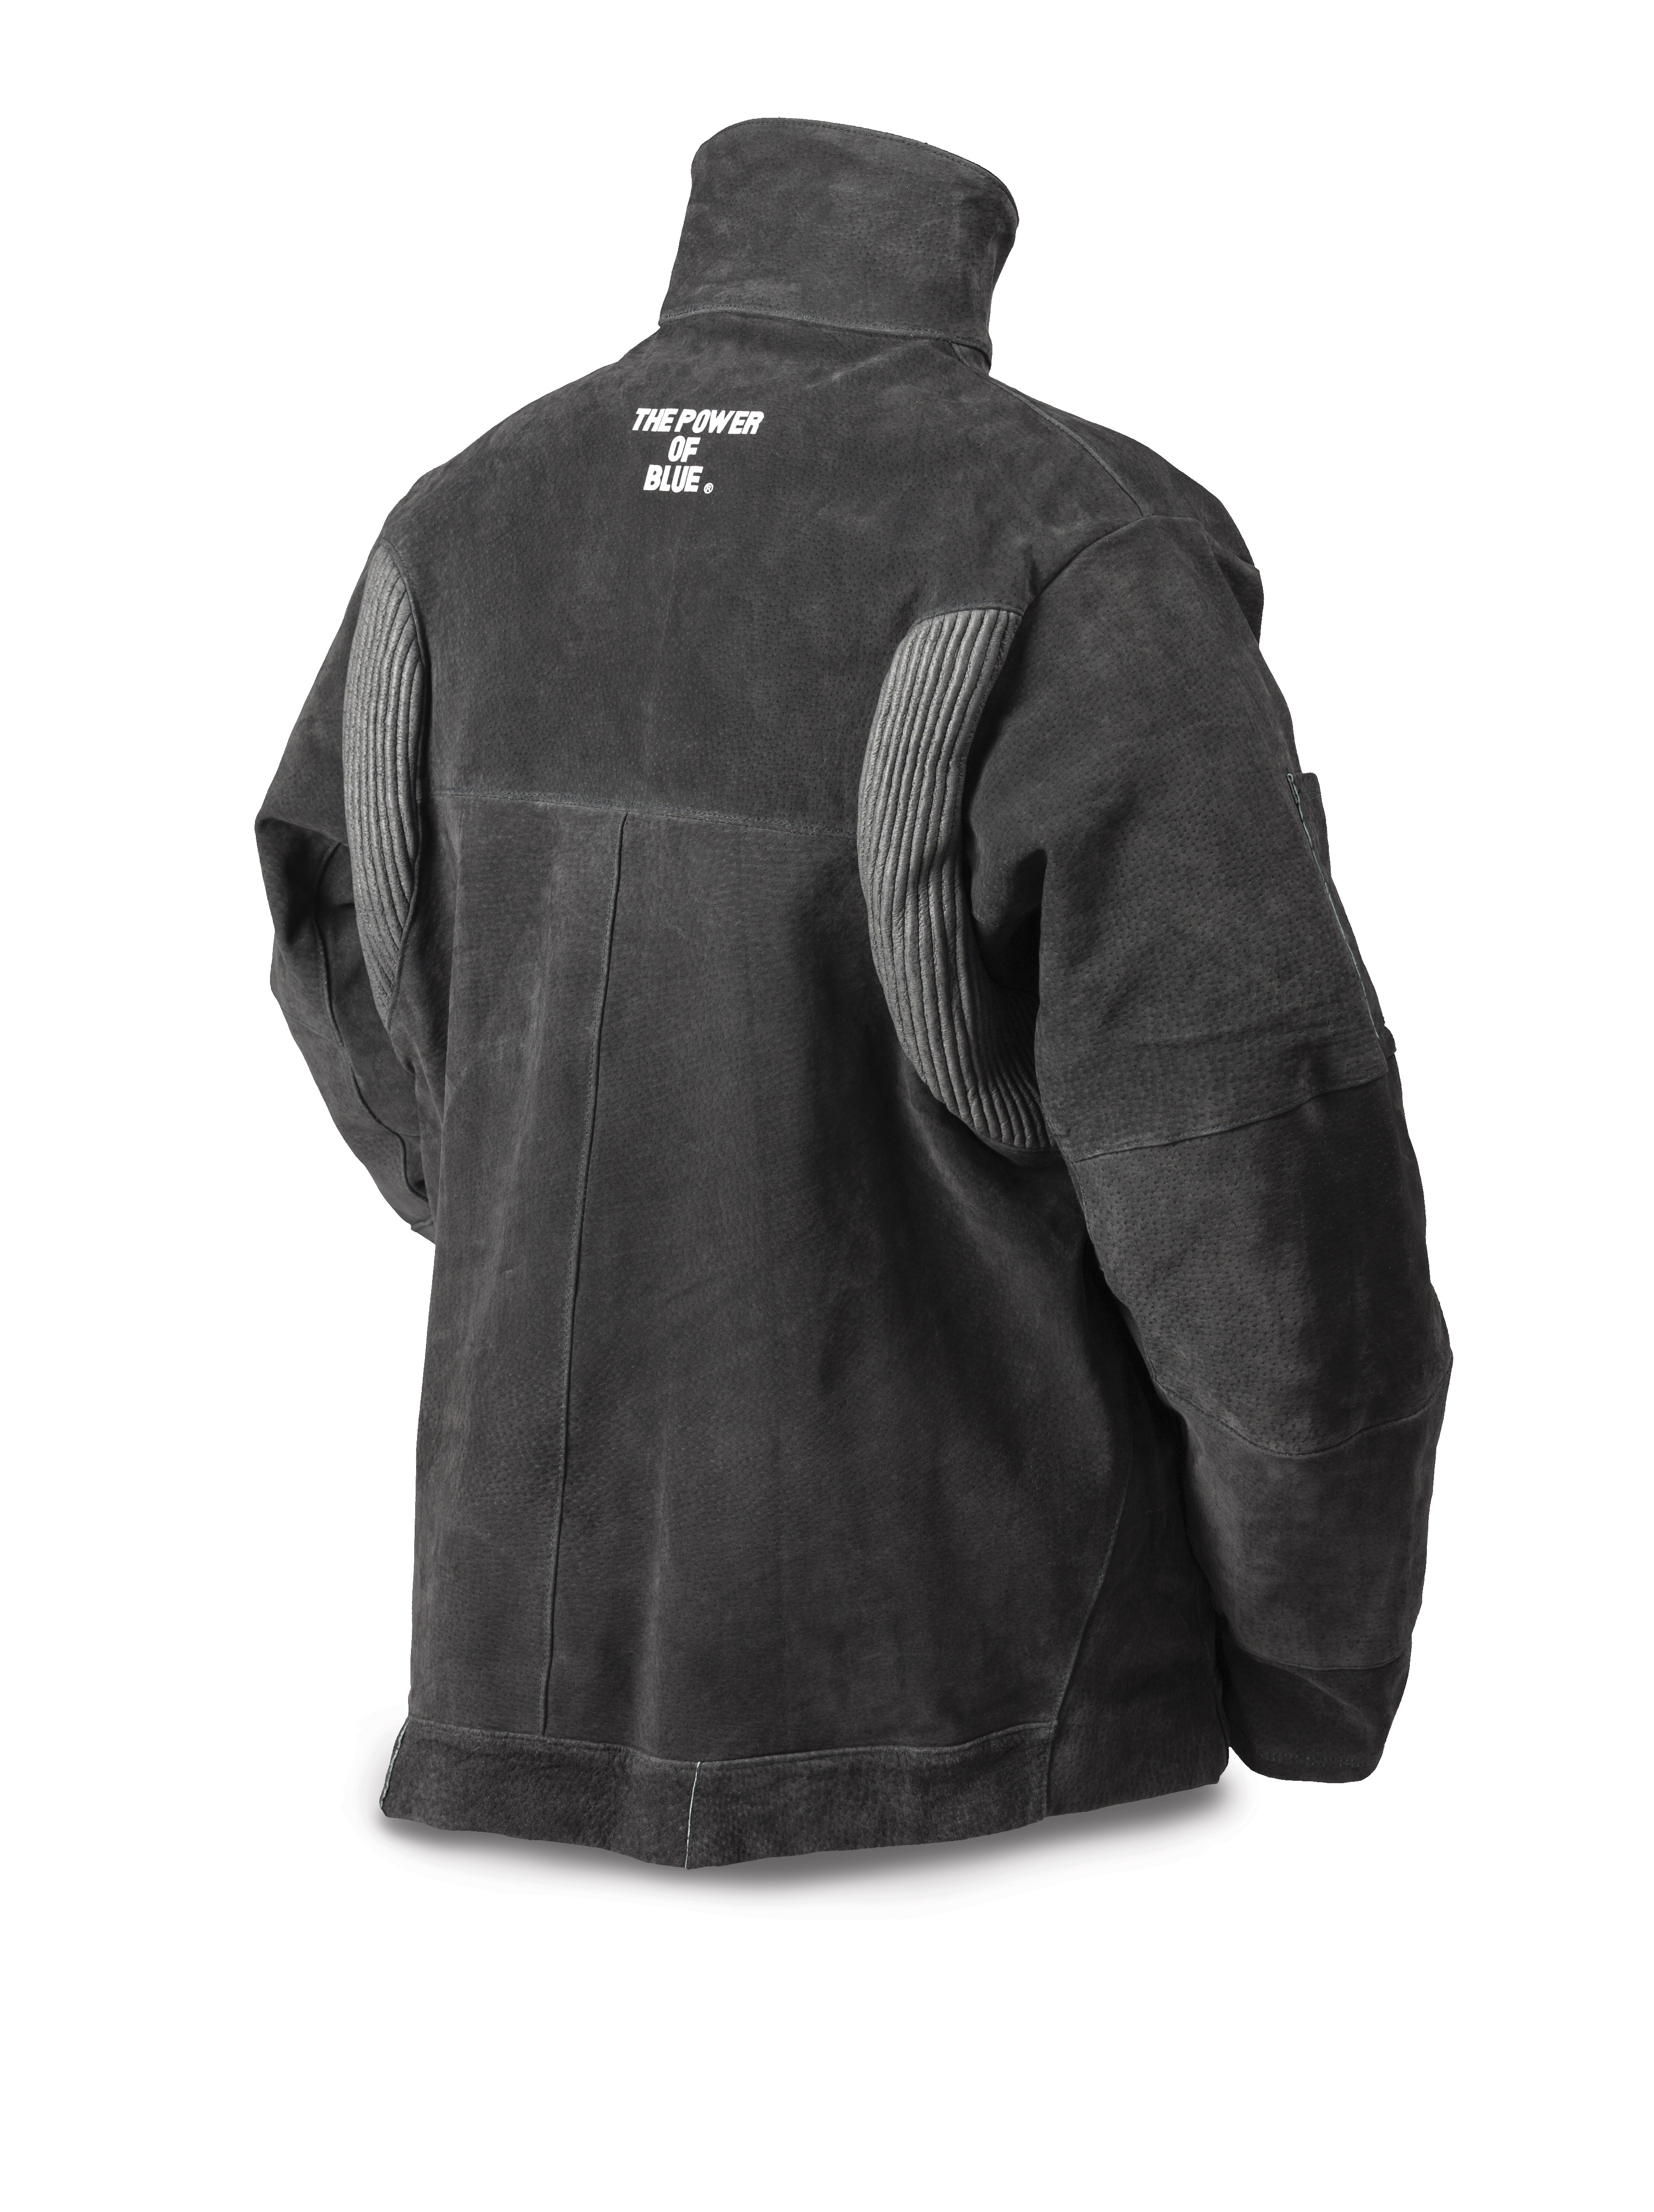 Split Leather Jacket, XL | MillerWelds